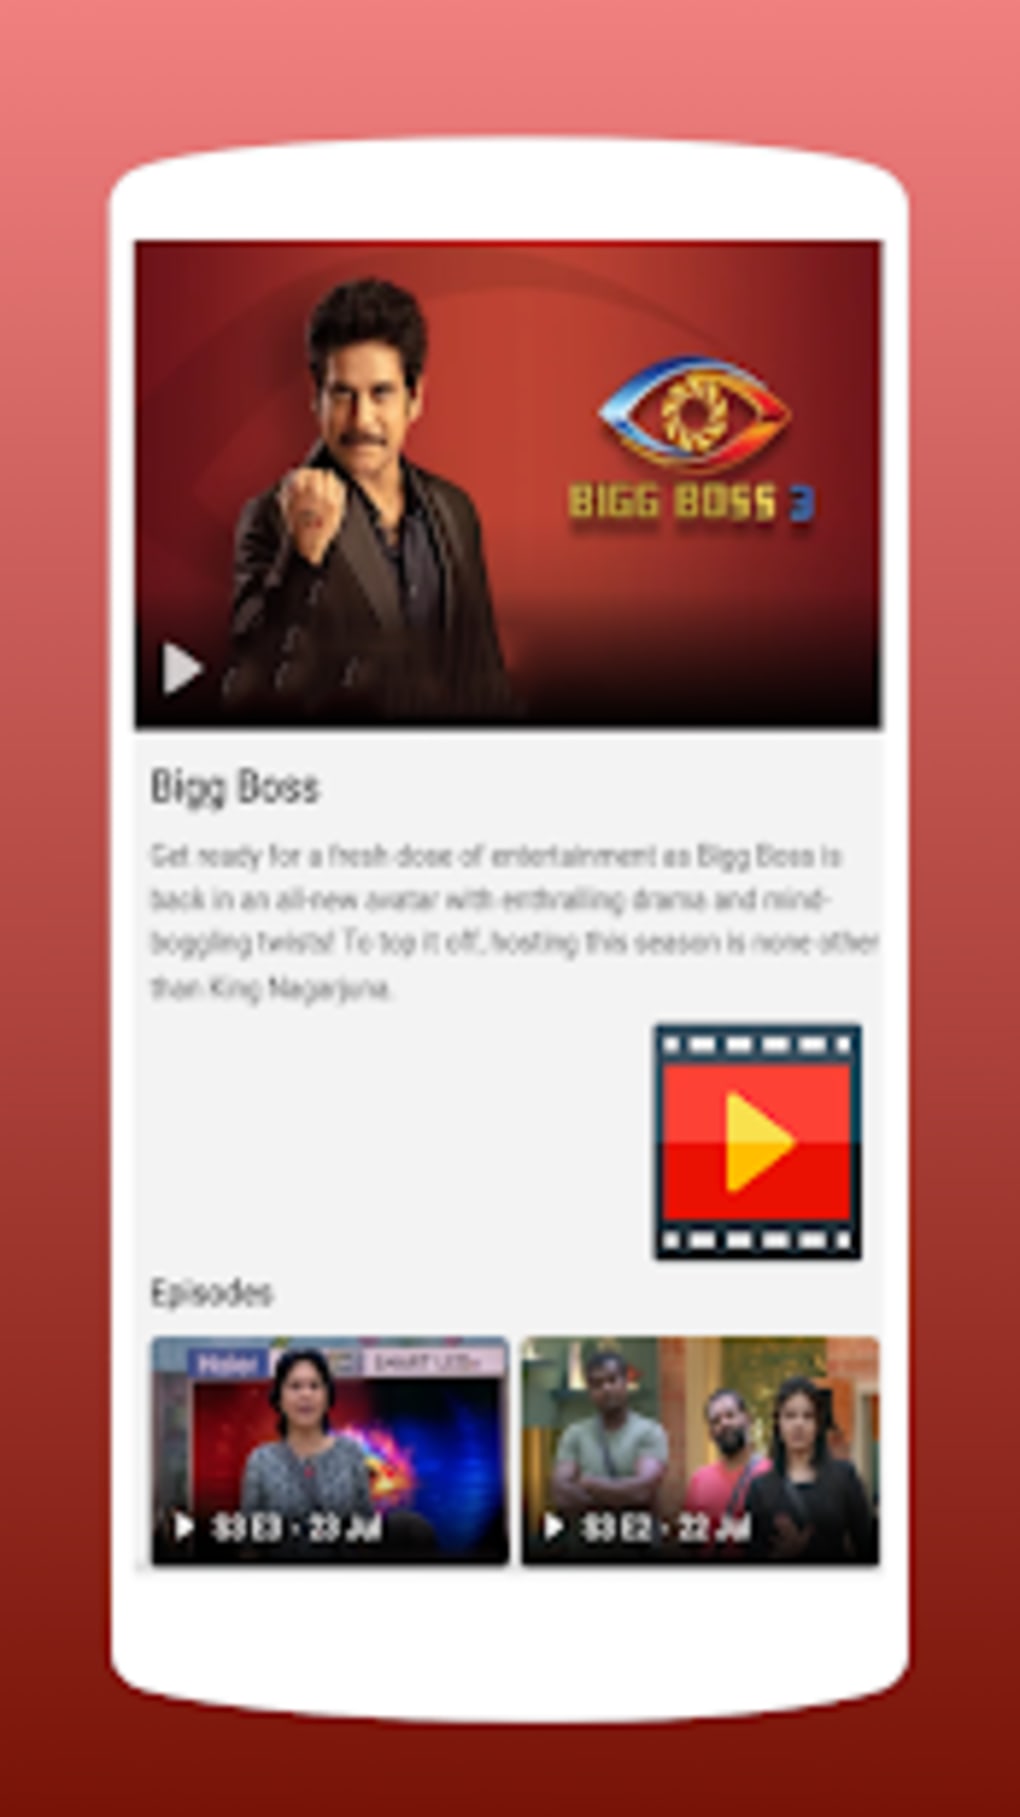 bigg boss 3 telugu full episodes online